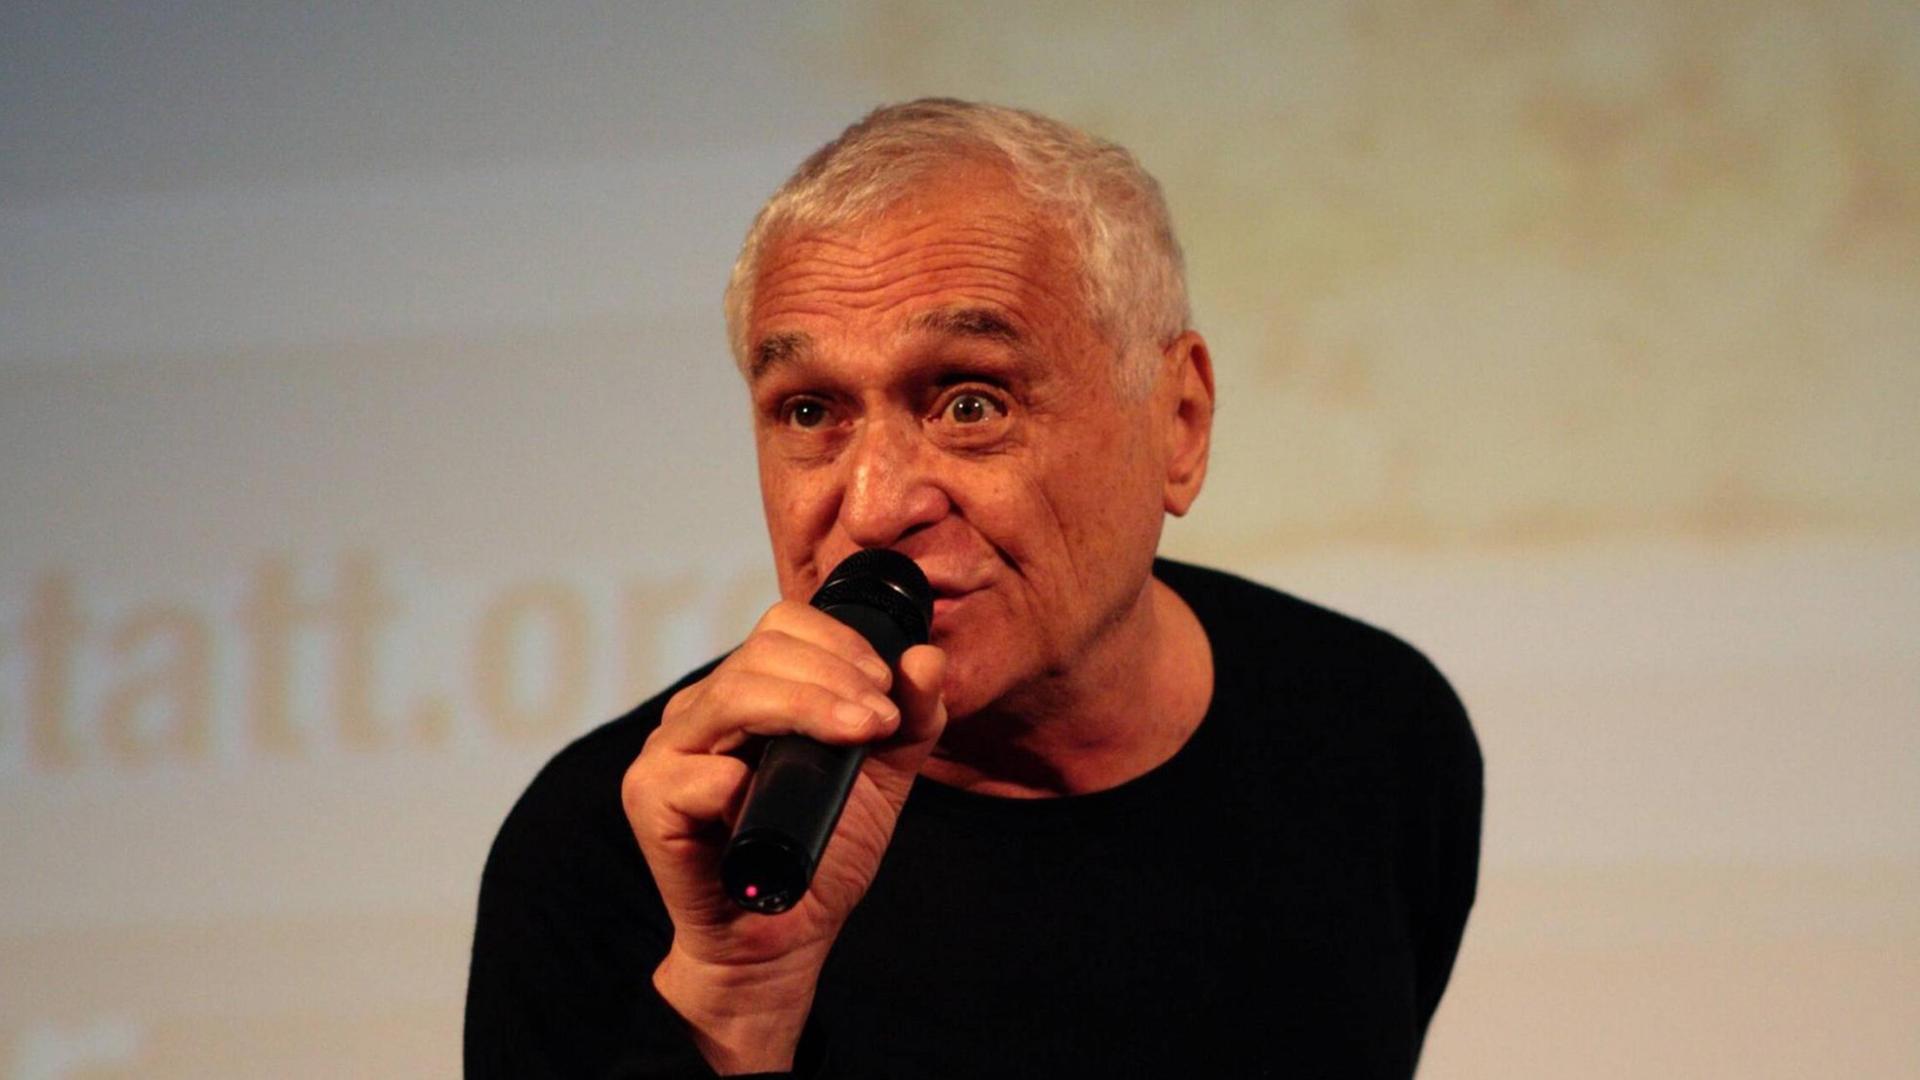 Dichter und Performer John Giorno zum ZEBRA Poetry Film Festival in Berlin 2008